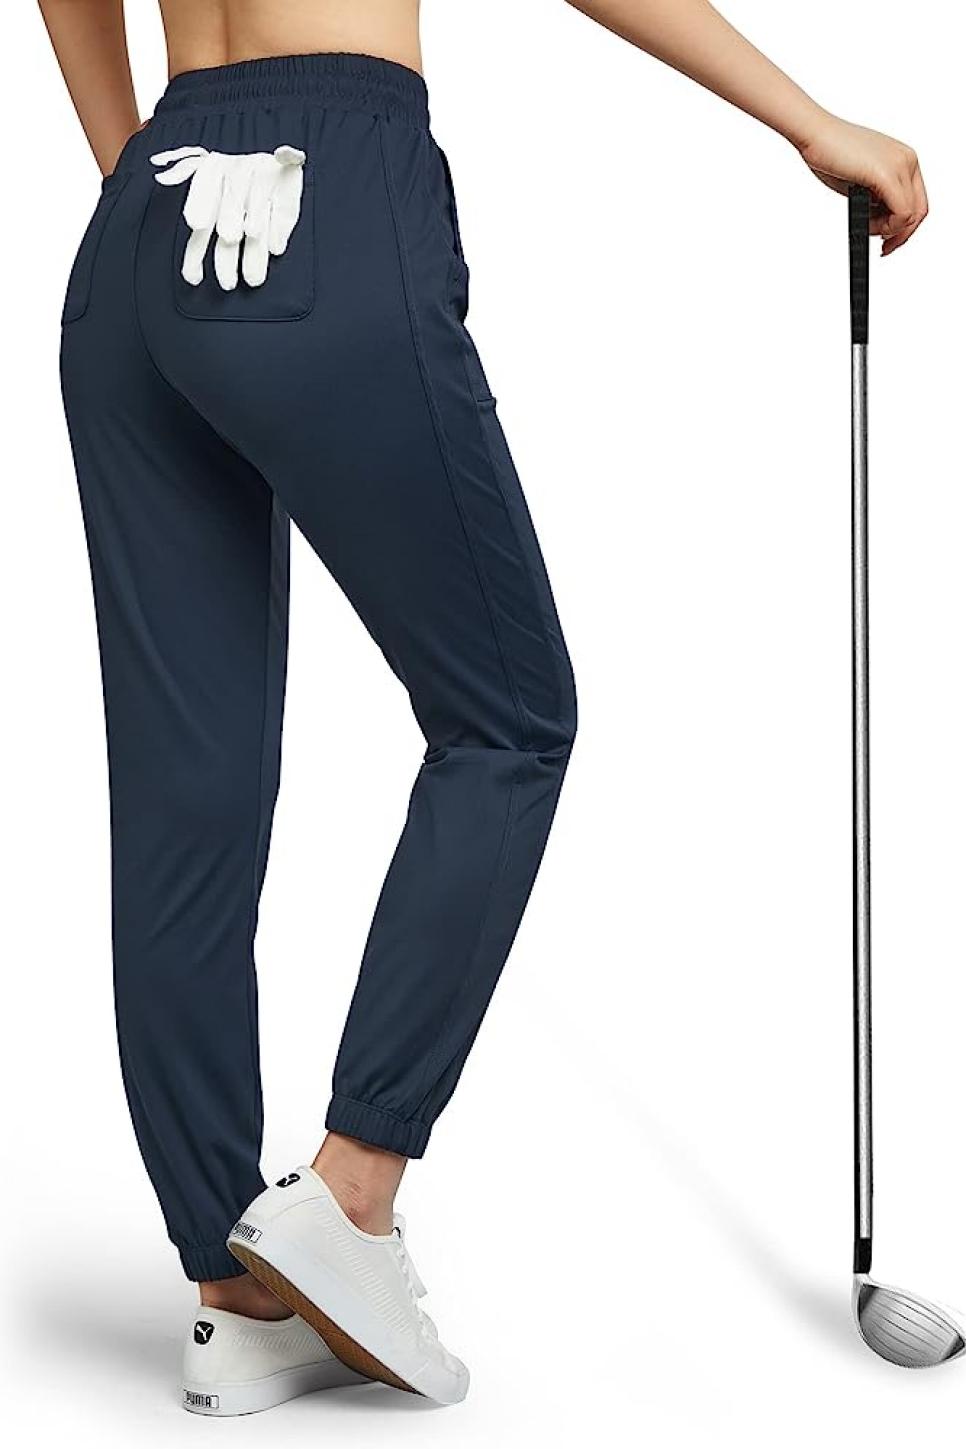 rx-amazong4free-womens-golf-pants-tapered-joggers.jpeg